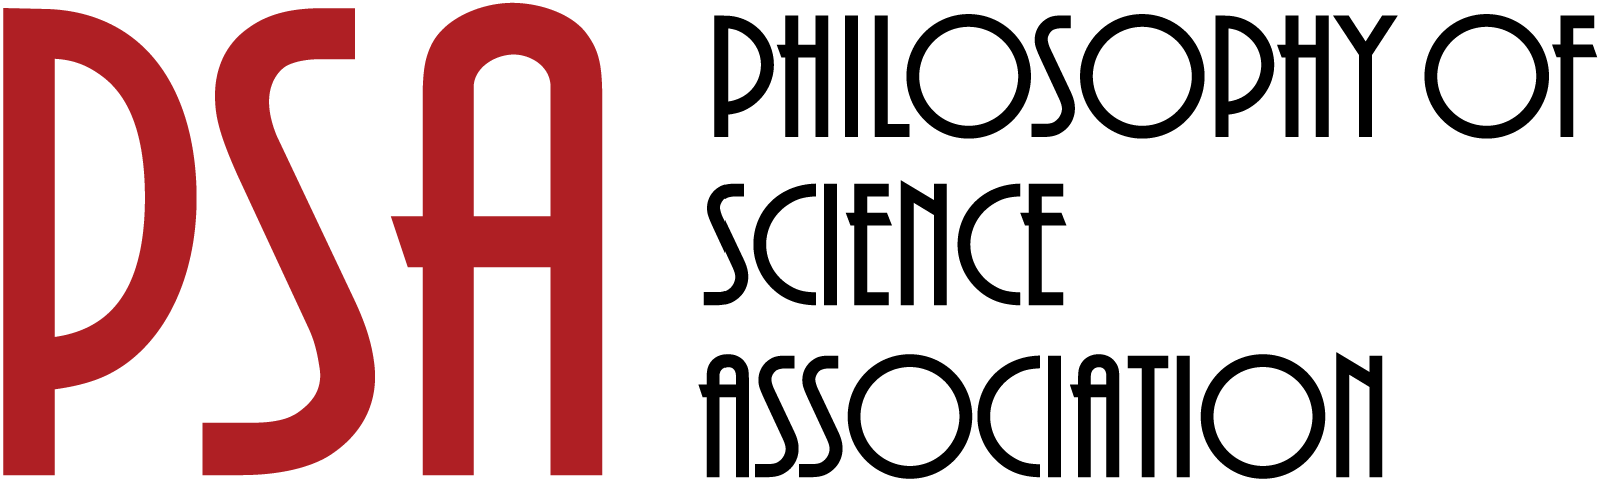 Philosophy of Science Association logo